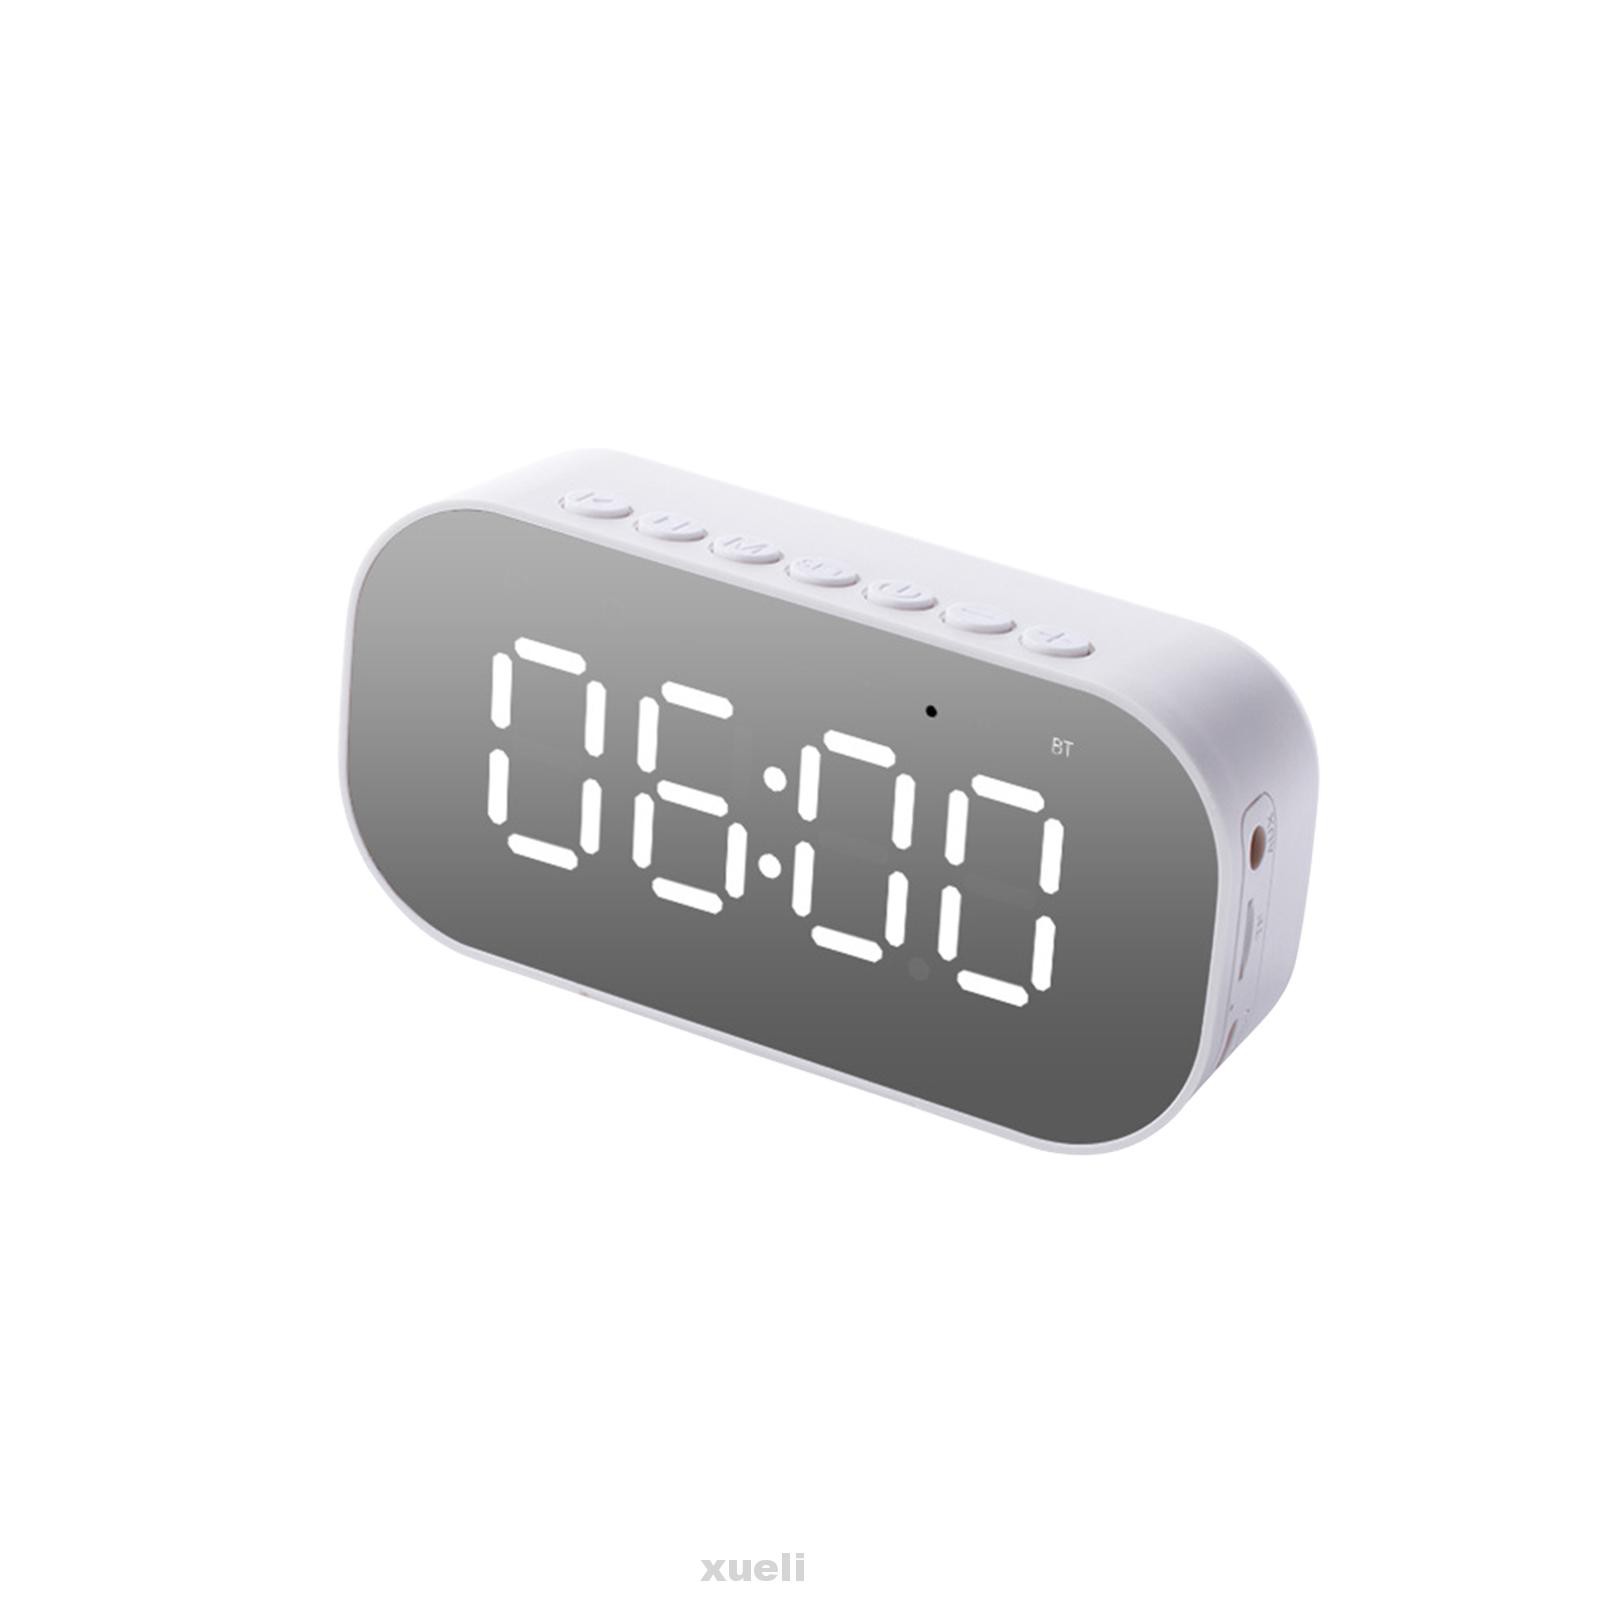 Digital Bedside Wireless Portable FM Radio Alarm Clock USB Rechargeable Mirror Surface HiFi Stereo Bluetooth Speaker